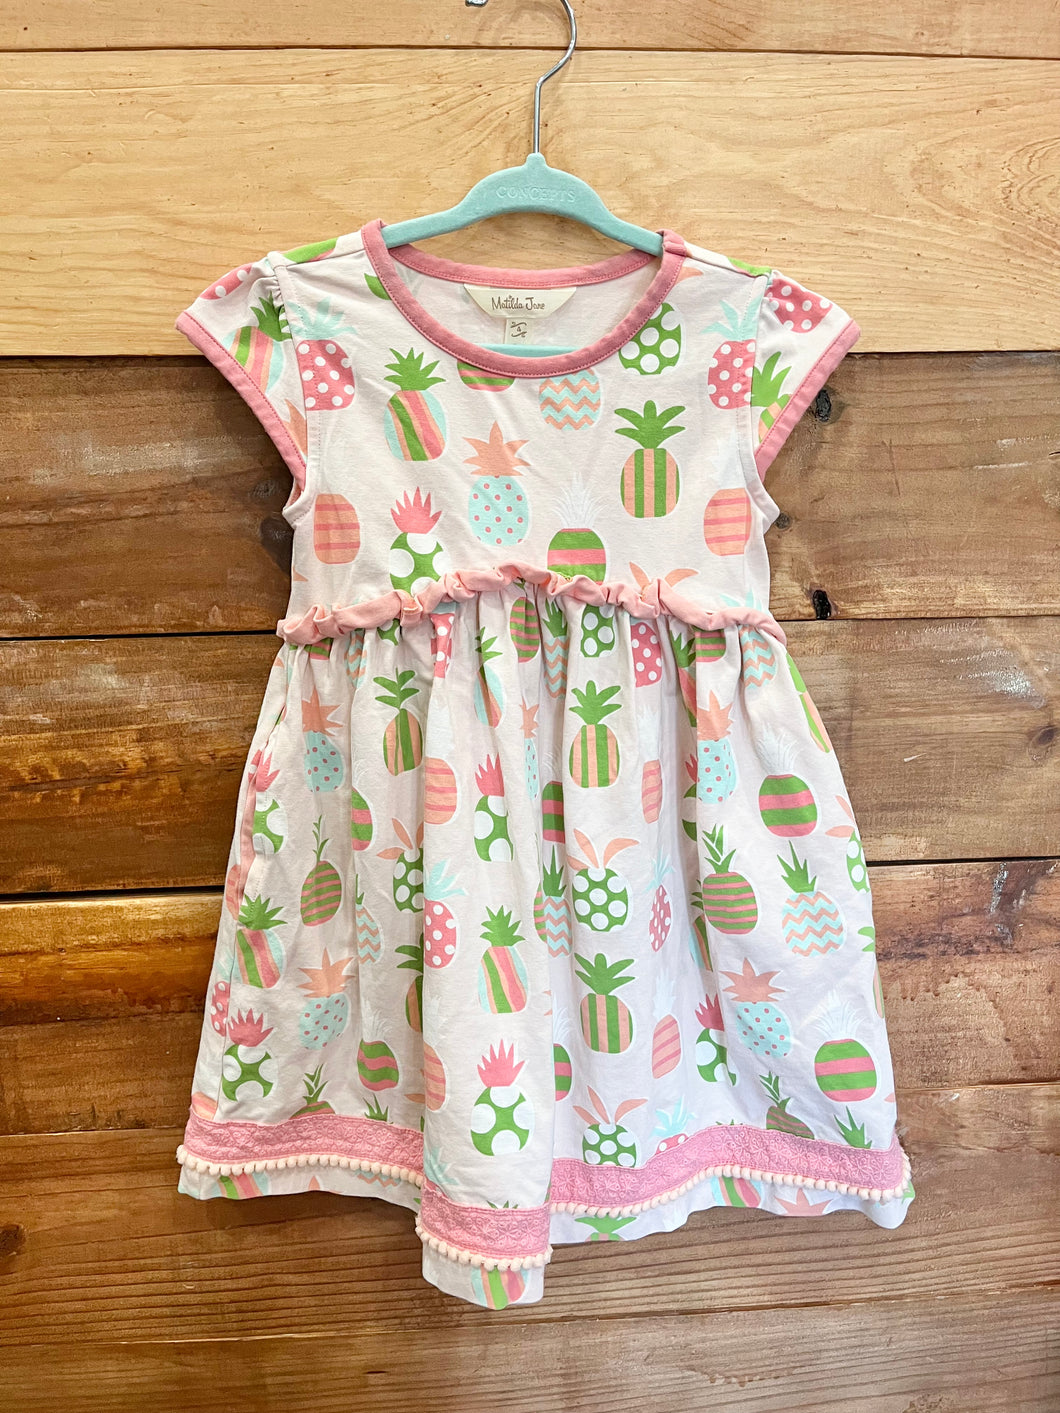 Matilda Jane Pink Pineapple Dress Size 4